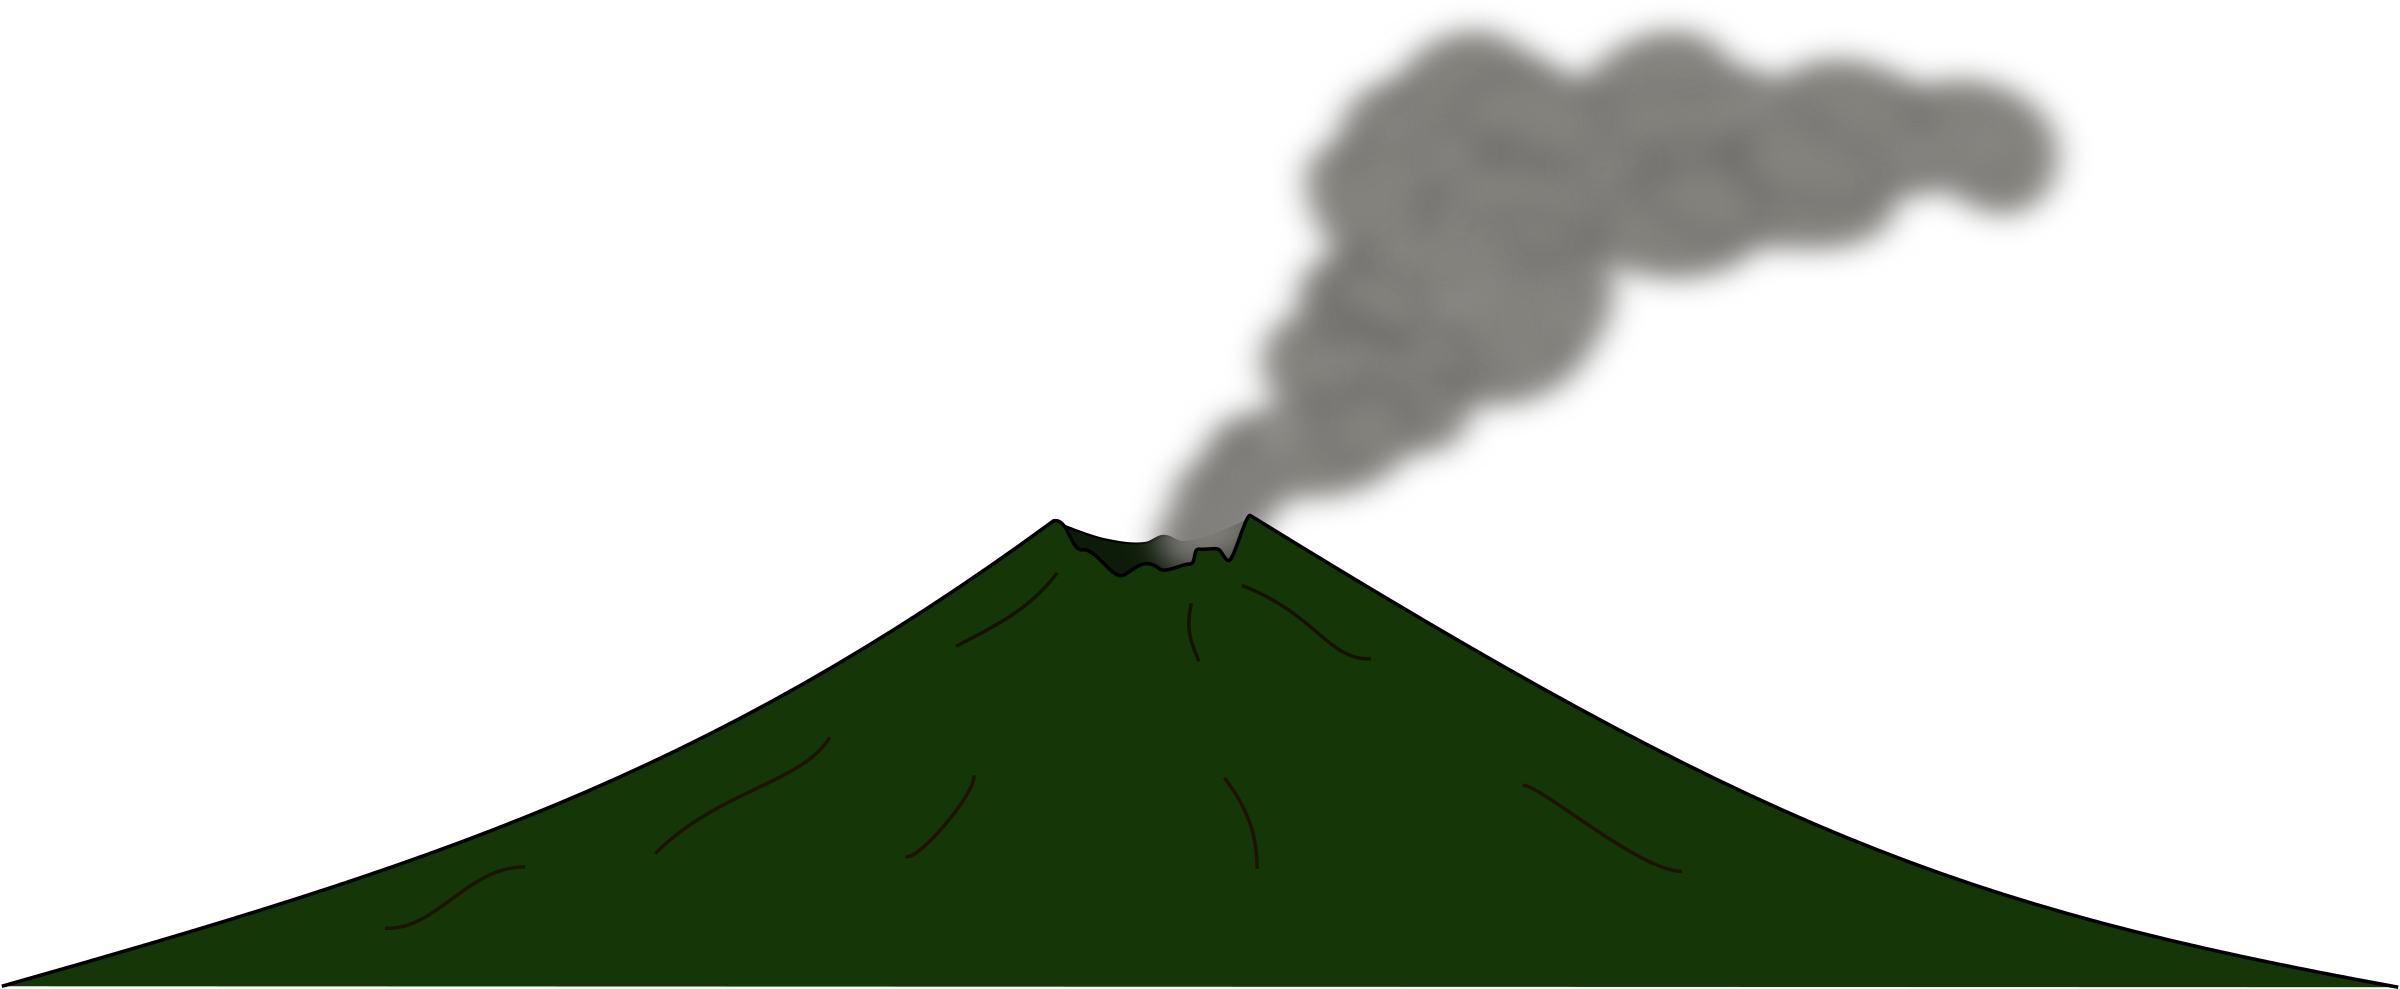 volcano eruption clipart - photo #27